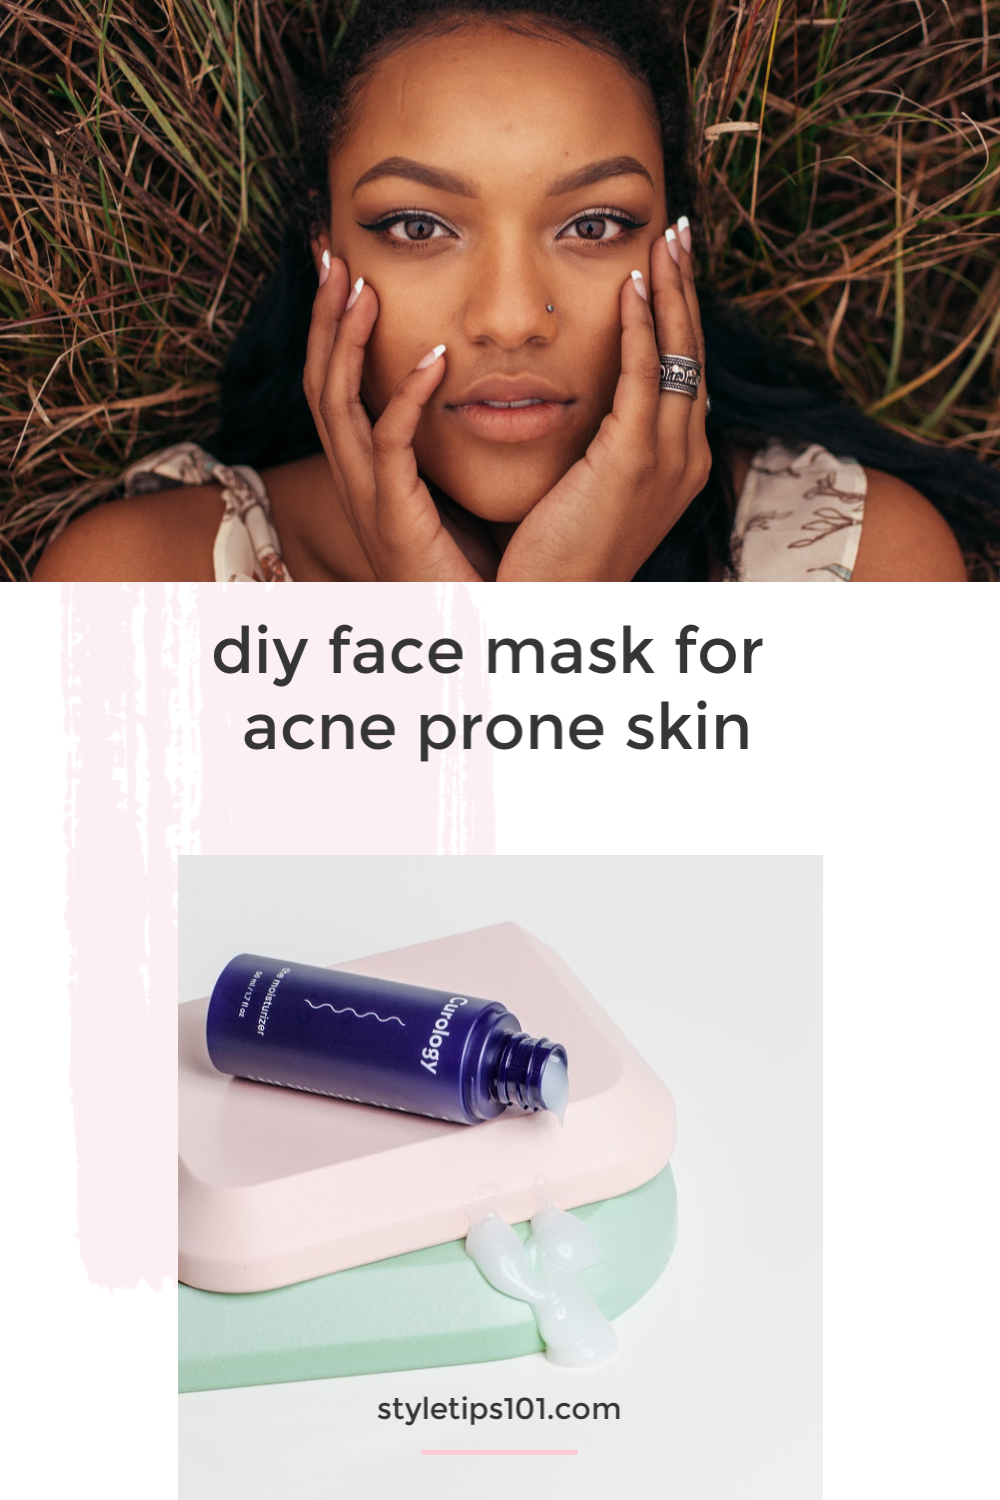 Diy Face Mask For Acne Prone Skin 1476